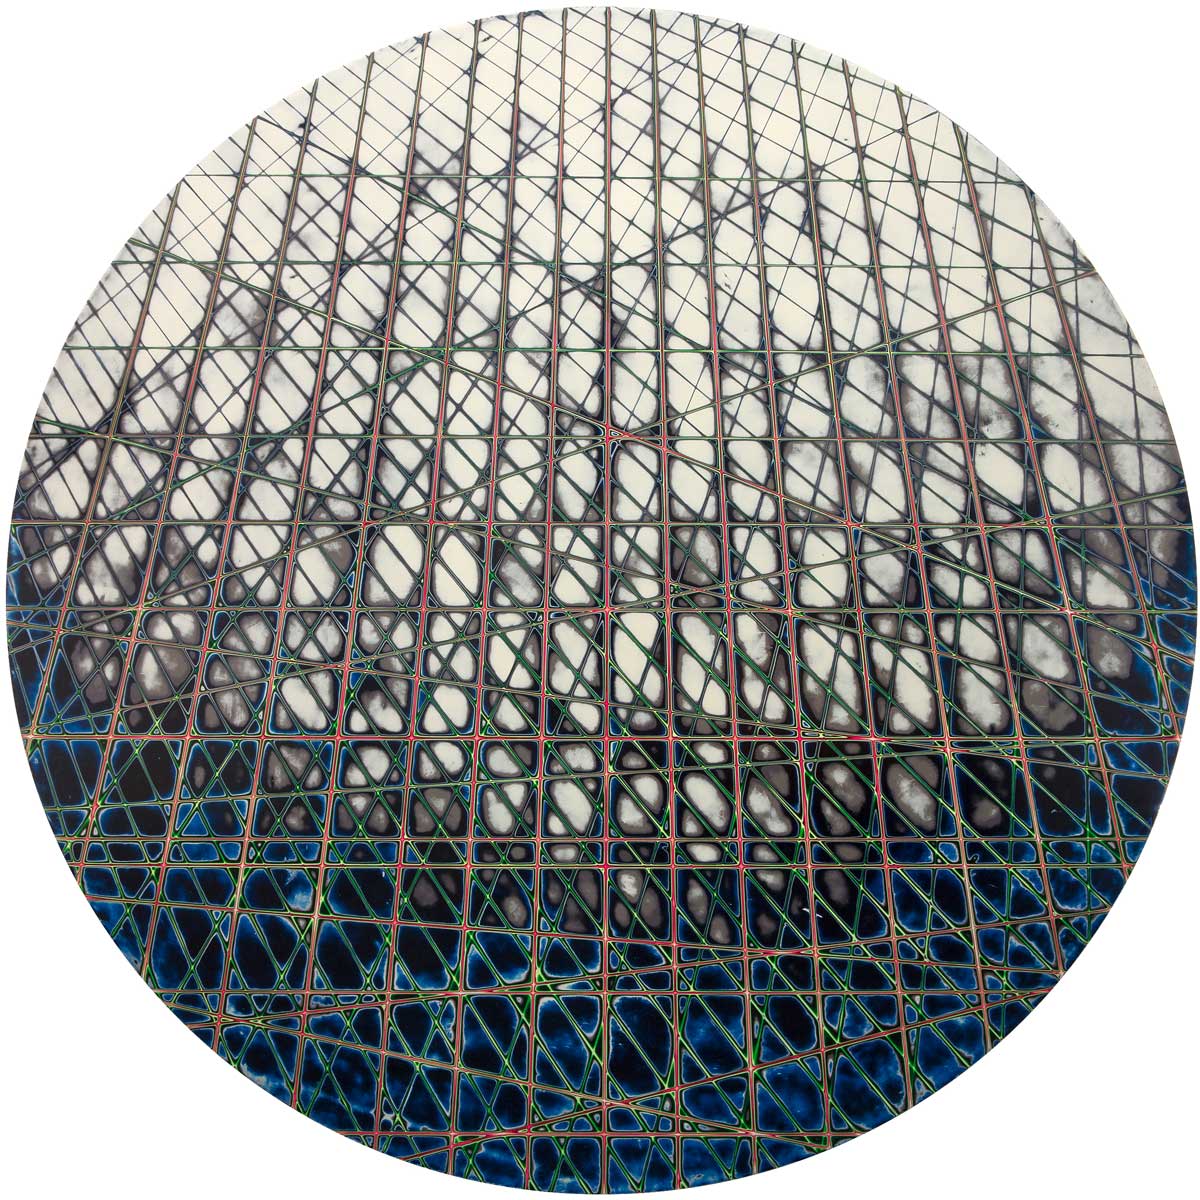 Tuval üzeri akrilik – Acrylic on canvas, 130 cm